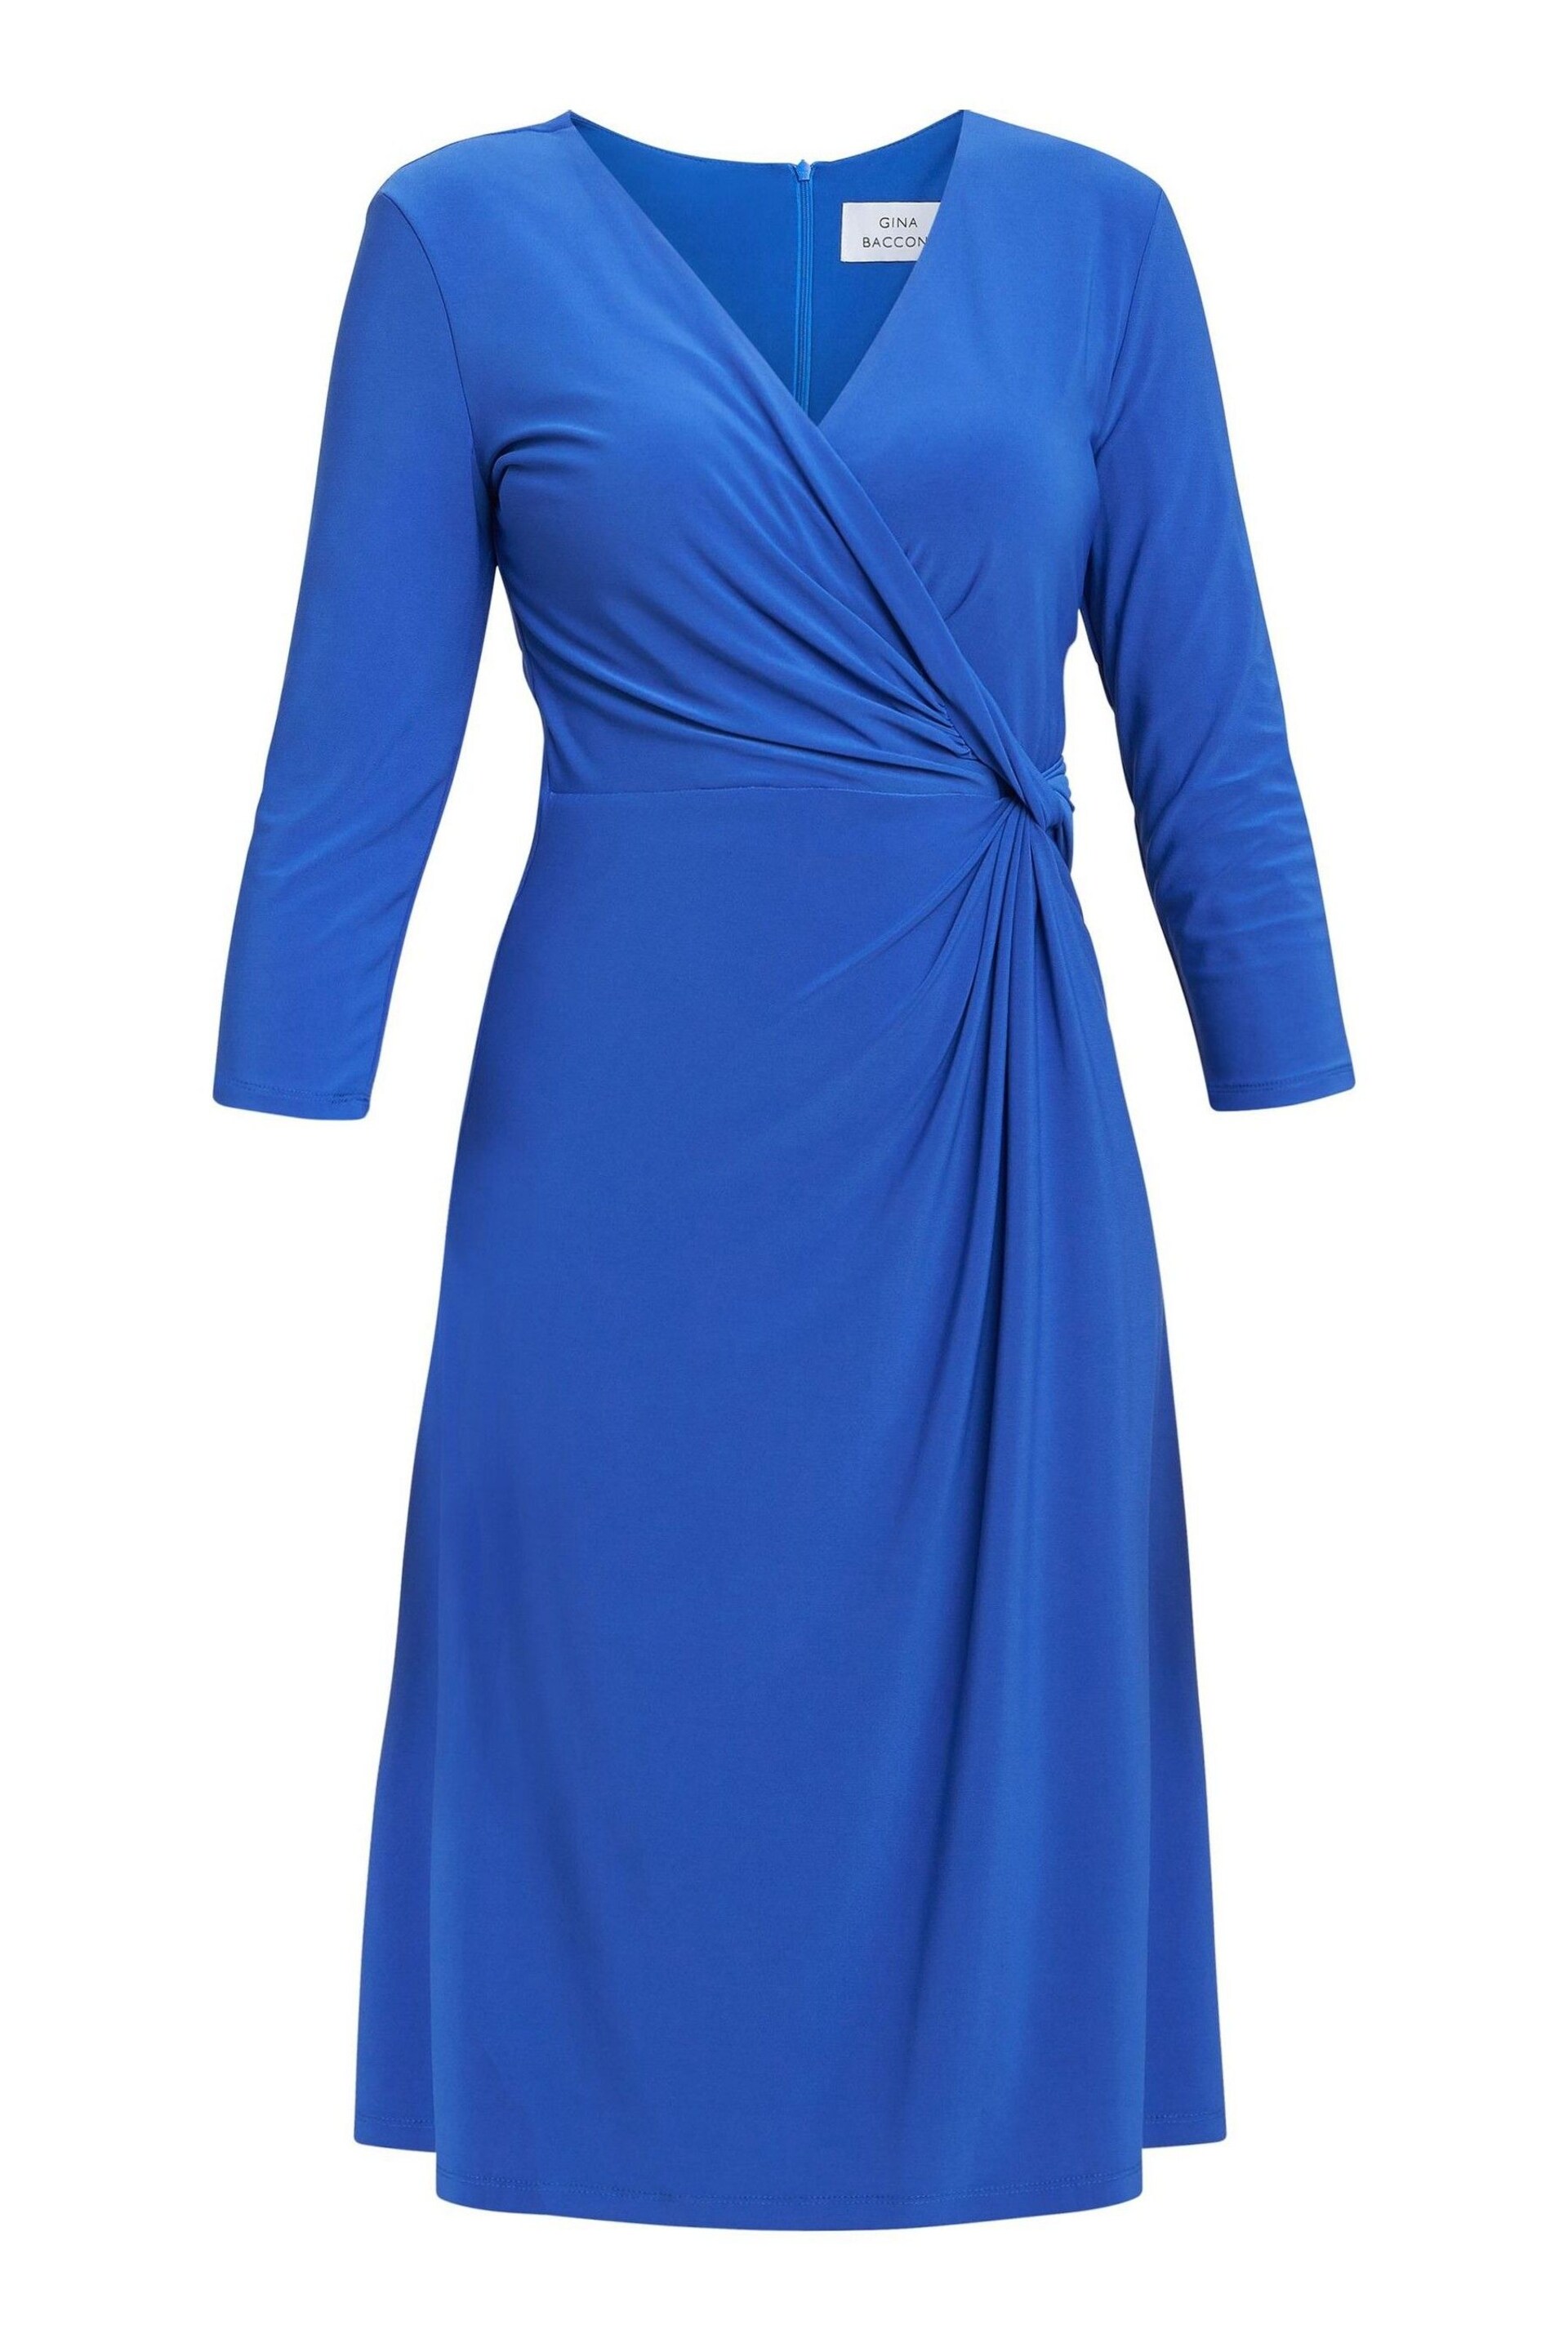 Gina Bacconi Blue Antonia Jersey Wrap Dress - Image 5 of 5